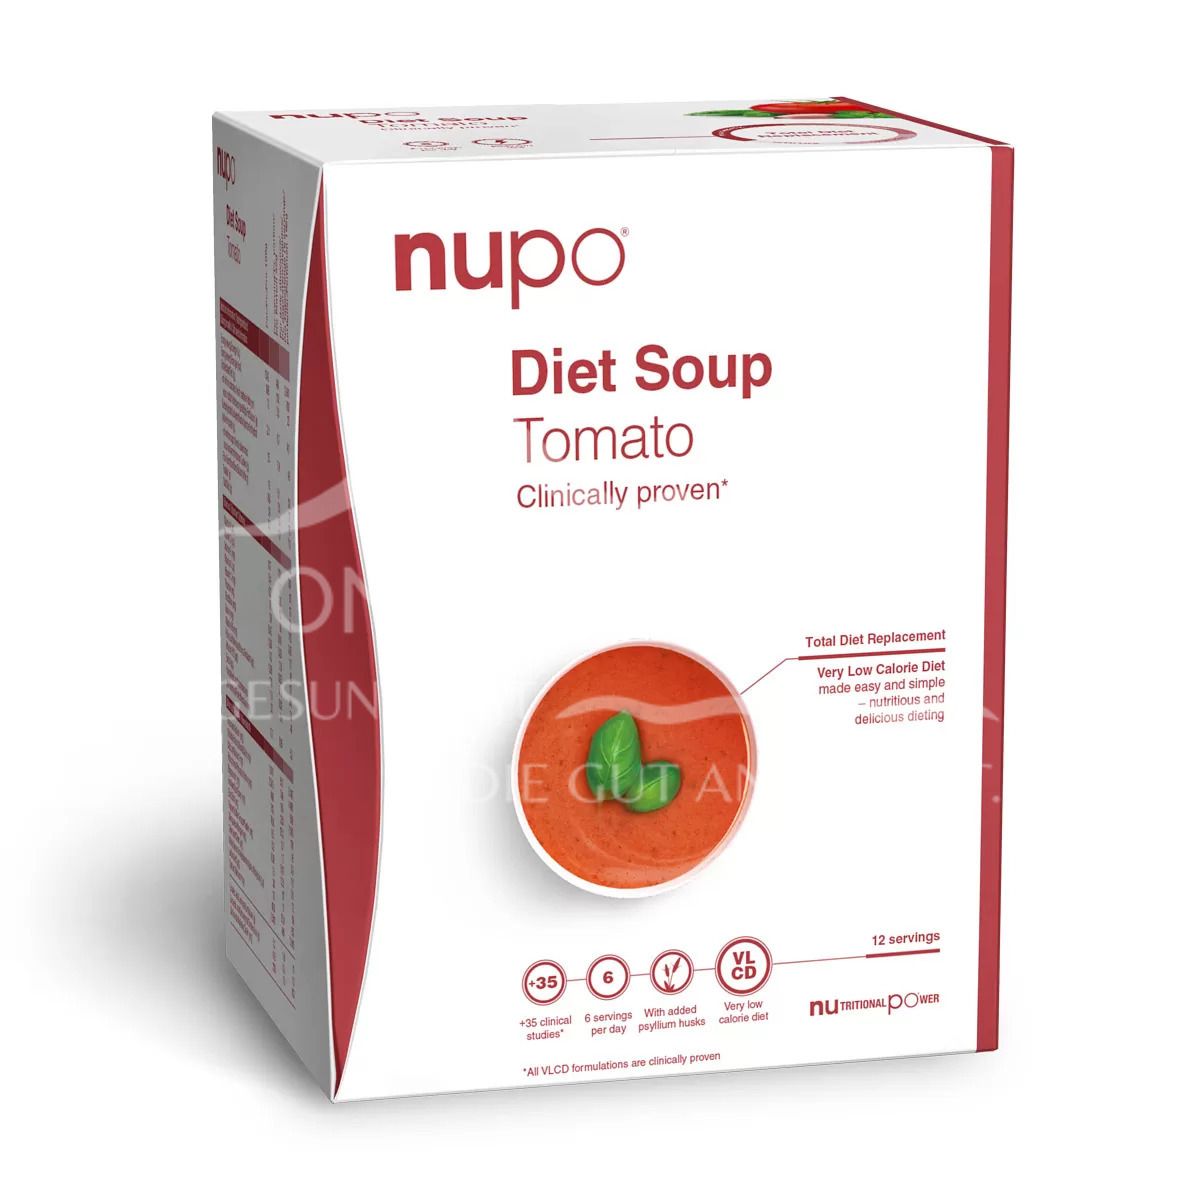 Nupo Diet Soup Tomato